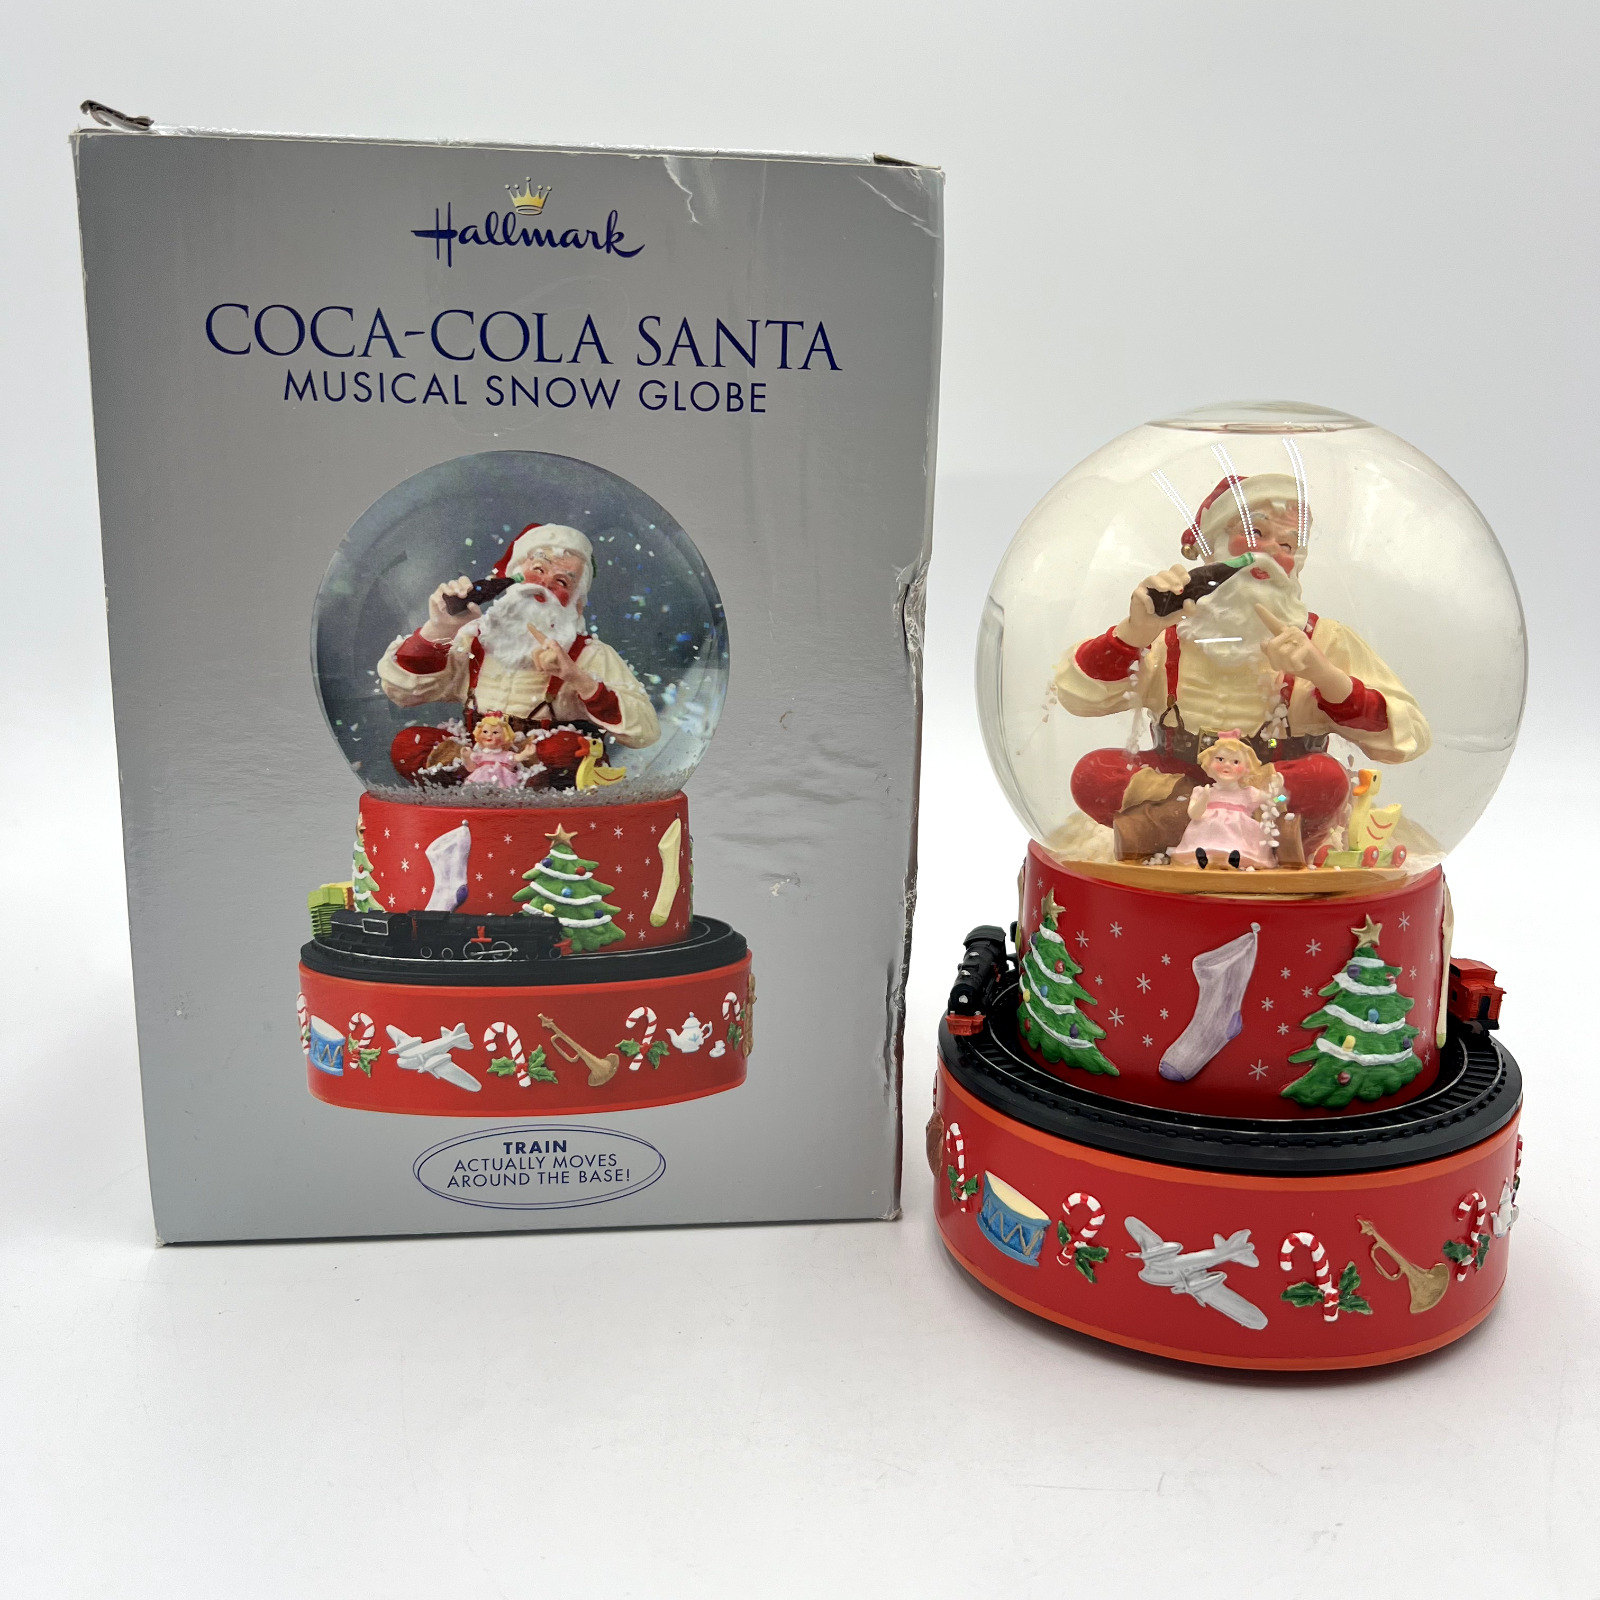 Hallmark Coca Cola 2001 Musical Snow Globe Santa Christmas Decor, Moving Train